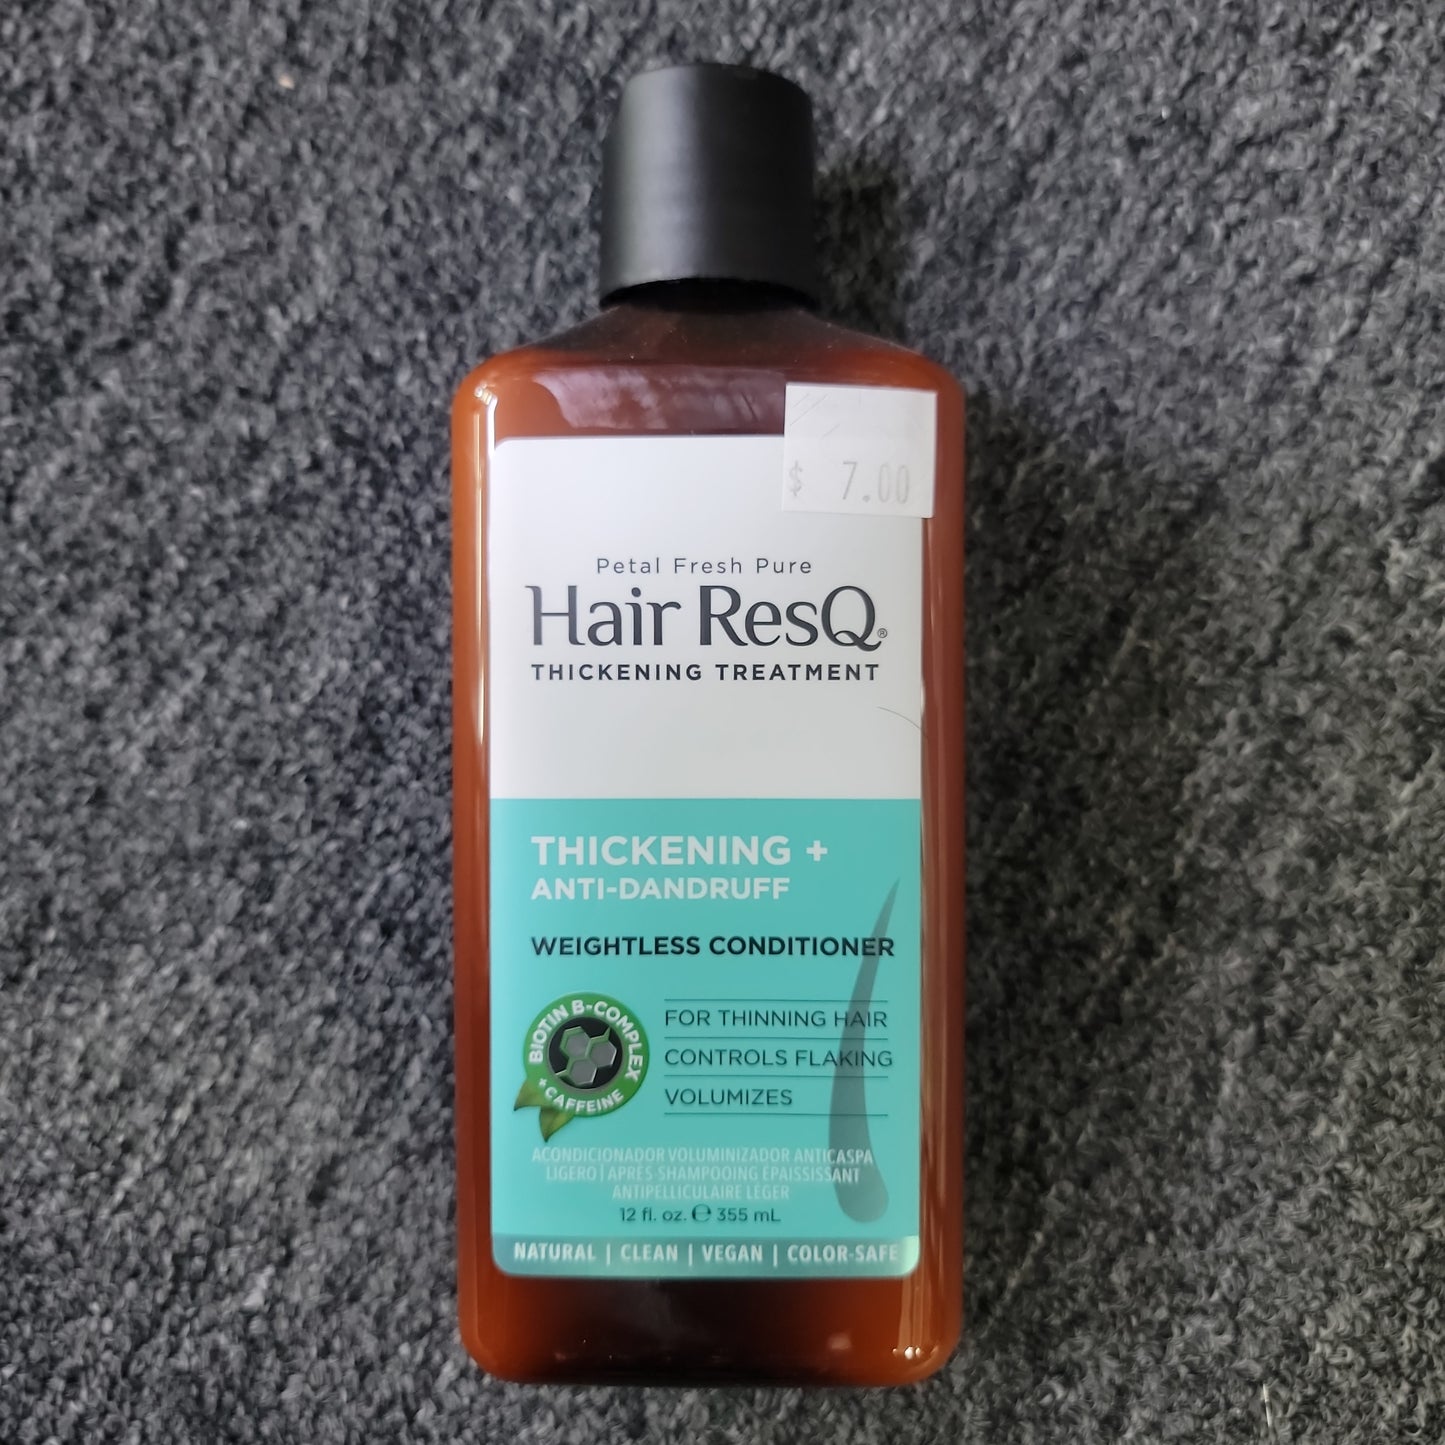 Petal fresh Hair ResQ thickening + anti-dandruff conditioner